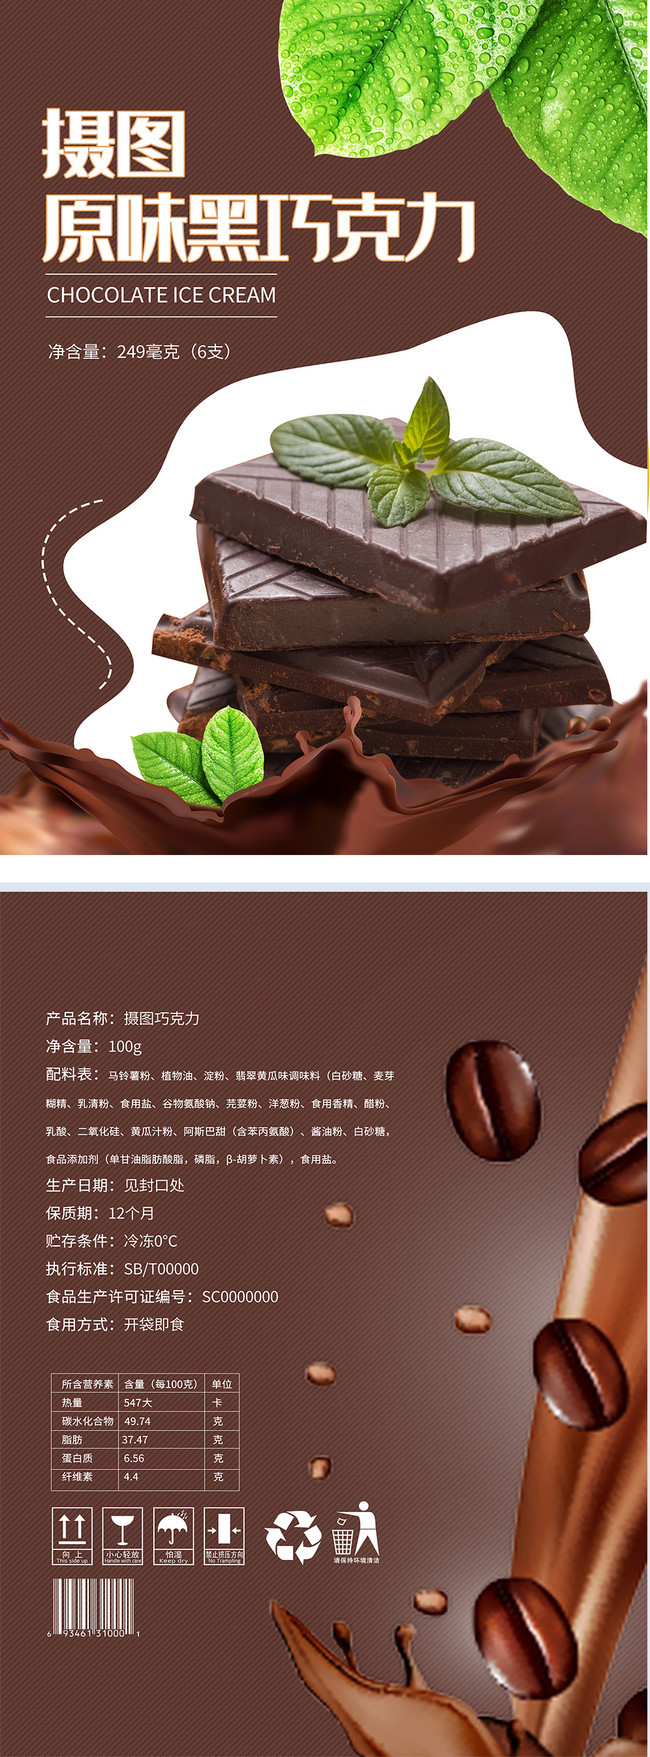 Tootsie Roll 360 Chocolate Midgees Manufacturer's Bag 2.42 LB (1.1KG)